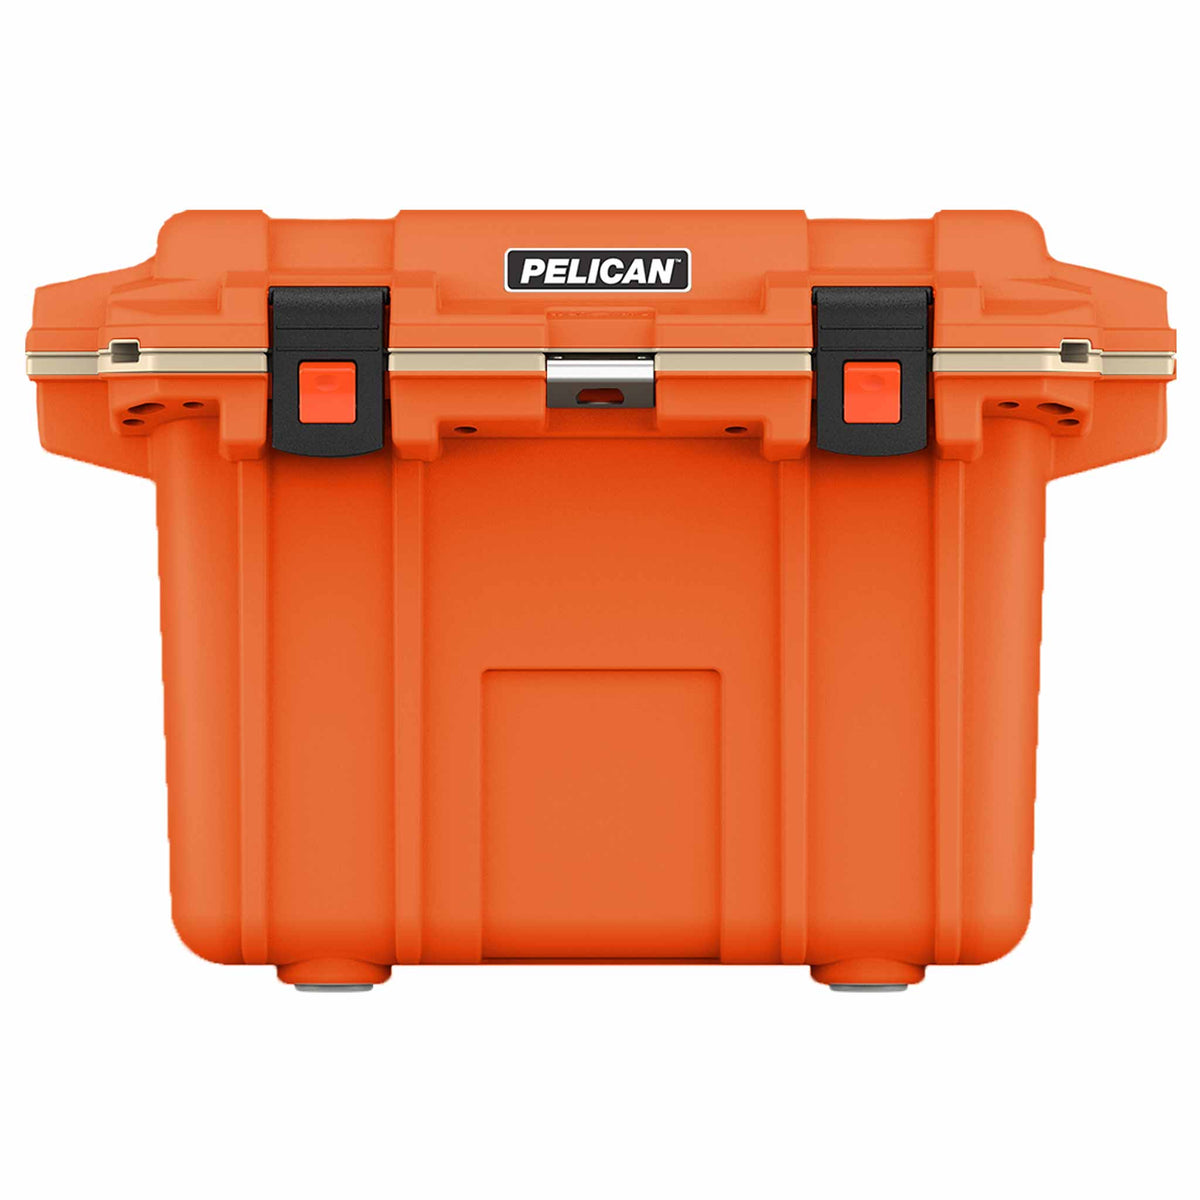 Refurbished 50QT Pelican Elite Cooler in Orange/Tan